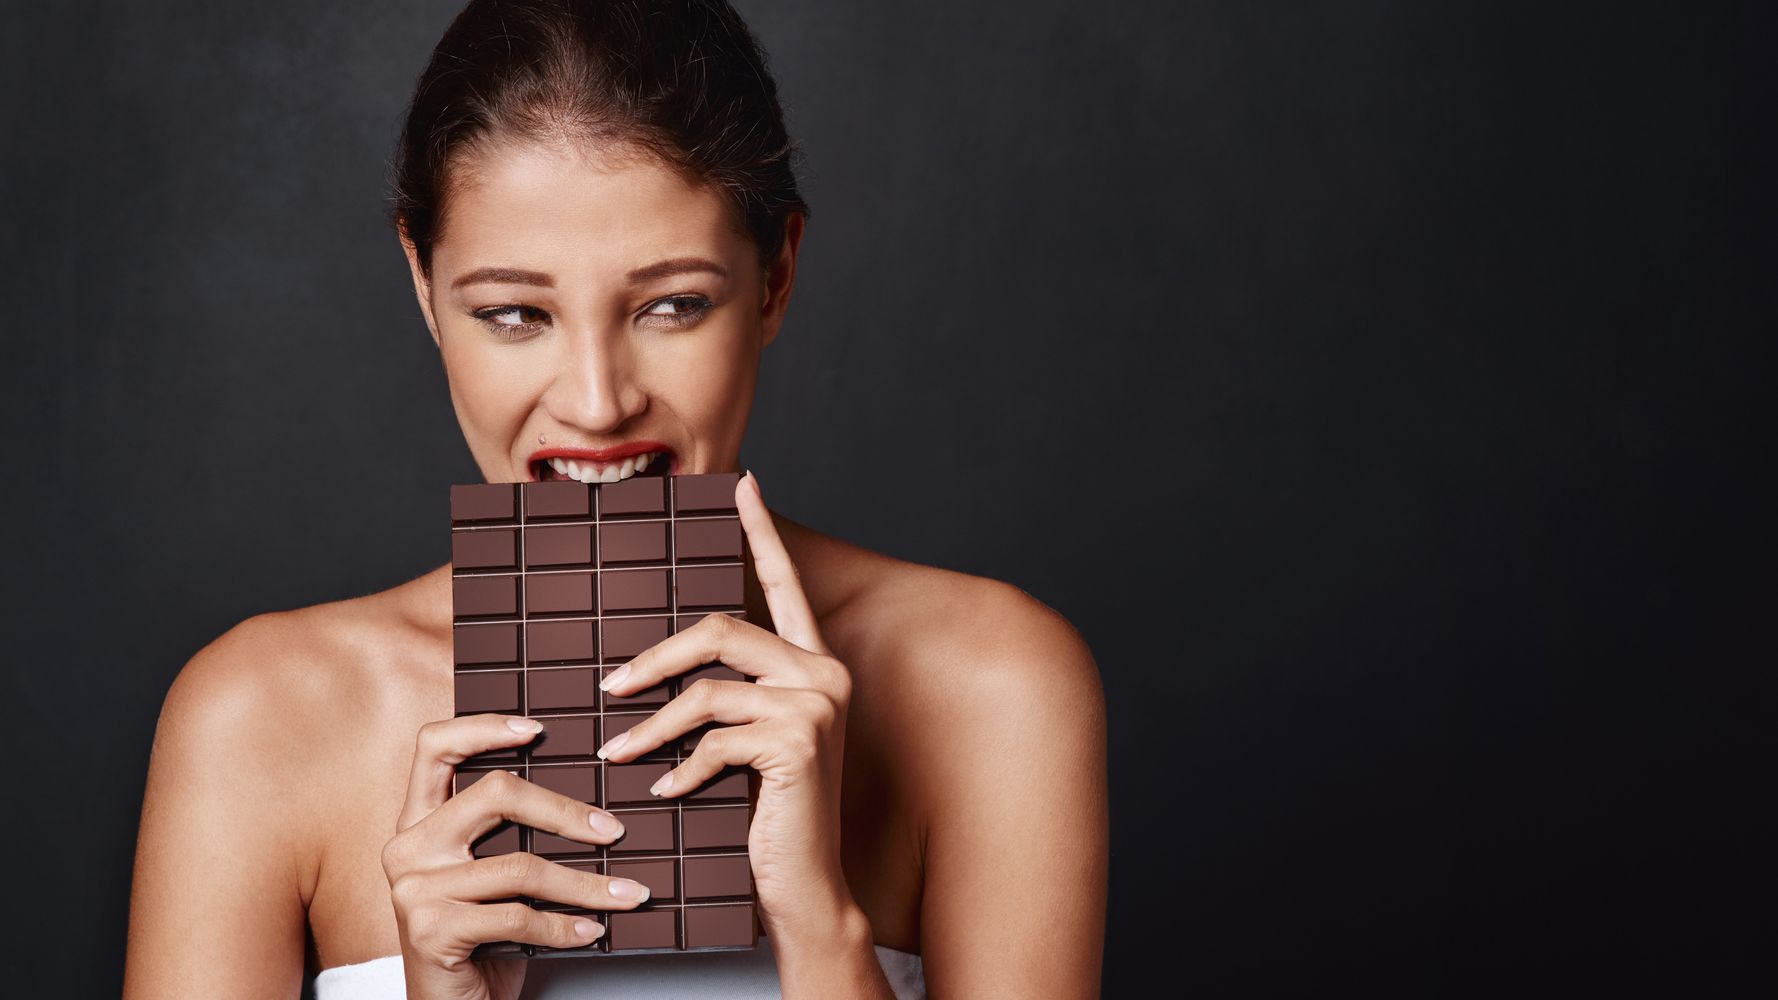 Dark chocolate contains antioxidants called flavonols that help us feel euphoric - Photo: Huff Post